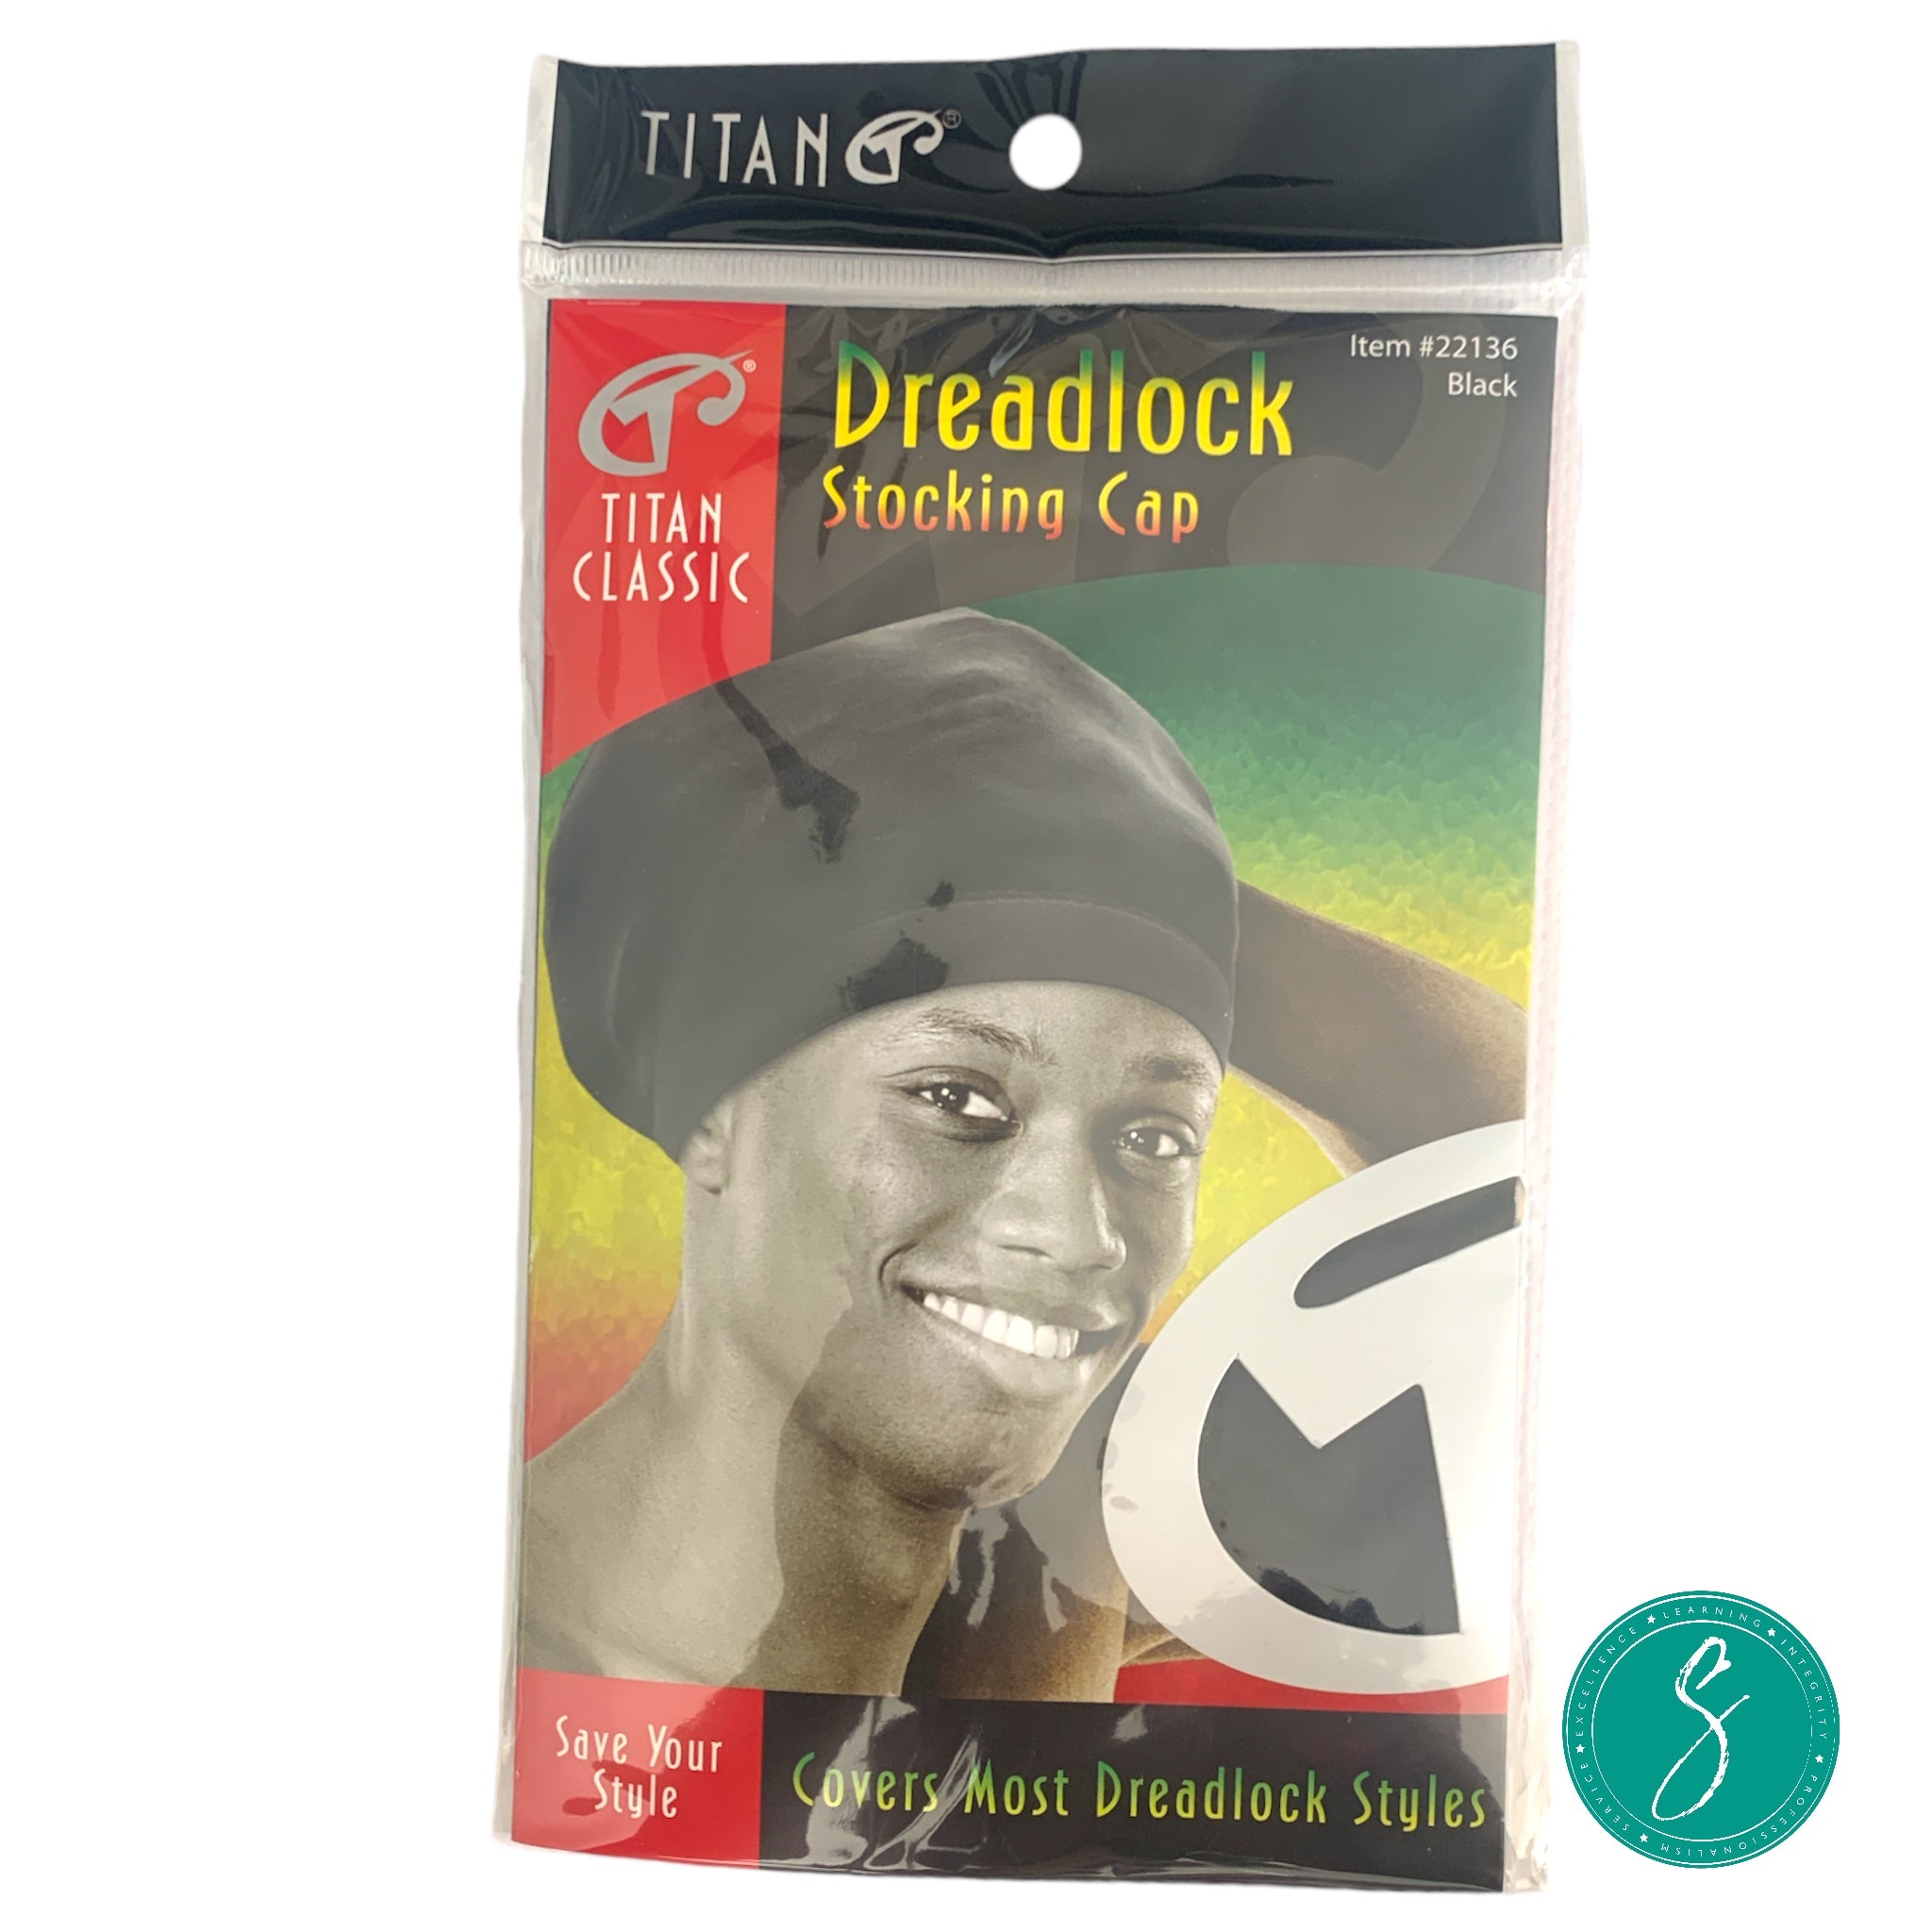 Titan Dreadlock Stocking Cap